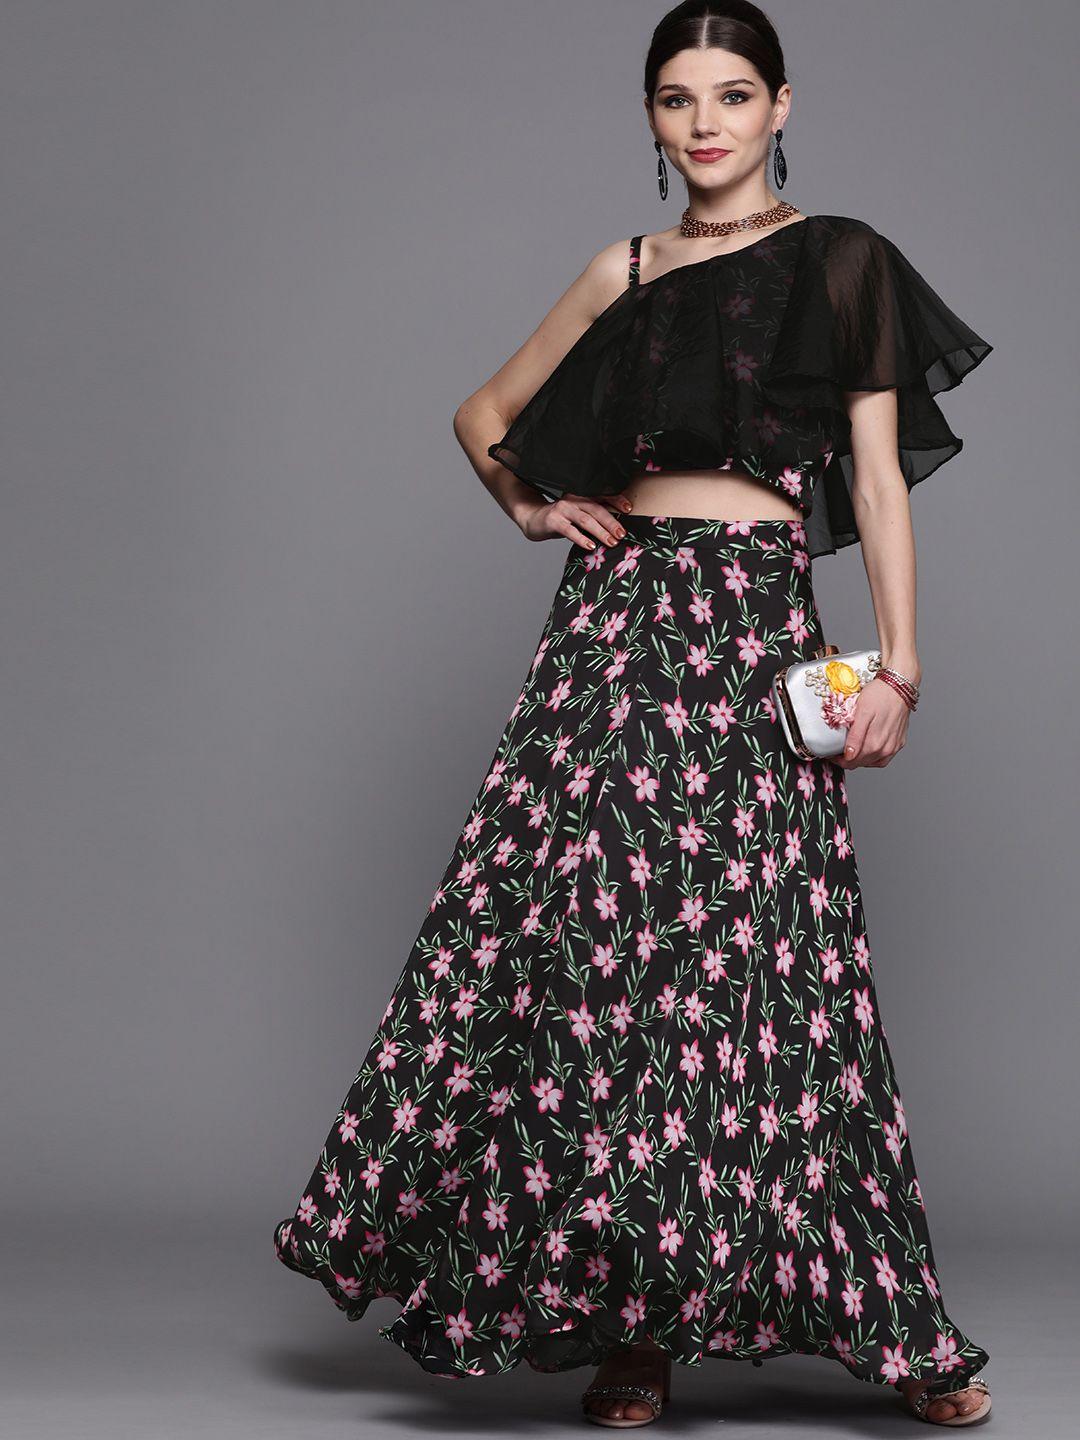 inddus women black & pink digital floral print crop top with skirt